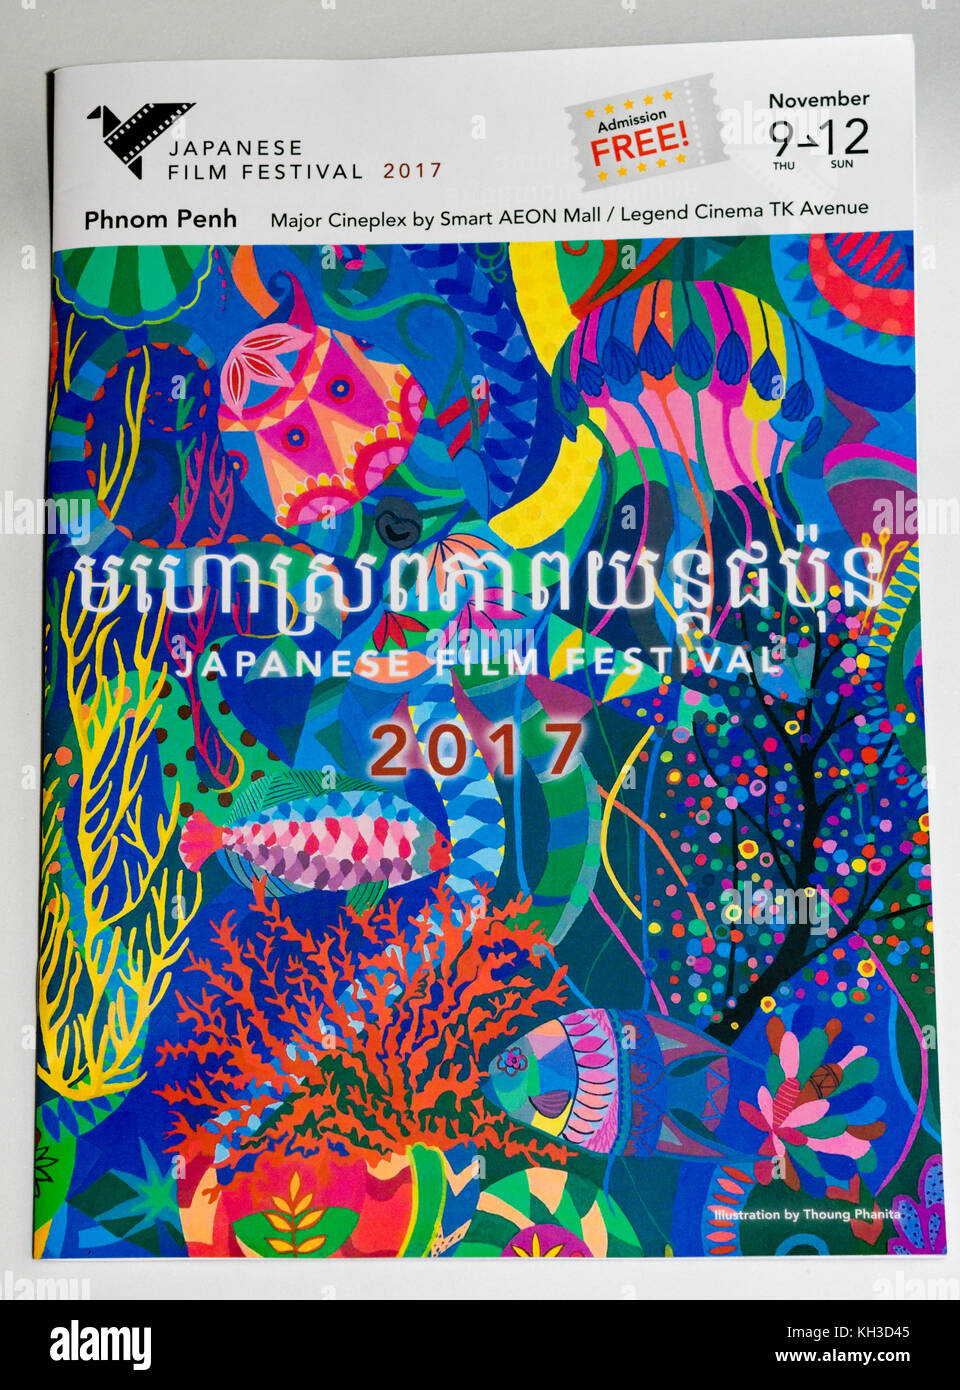 Festival handbook of Japanese Film Festival 2017 in Phnom Penh, Cambodia. It features illustration titled 'Aquarium' by Khmer student Thoung Phanita Stock Photo